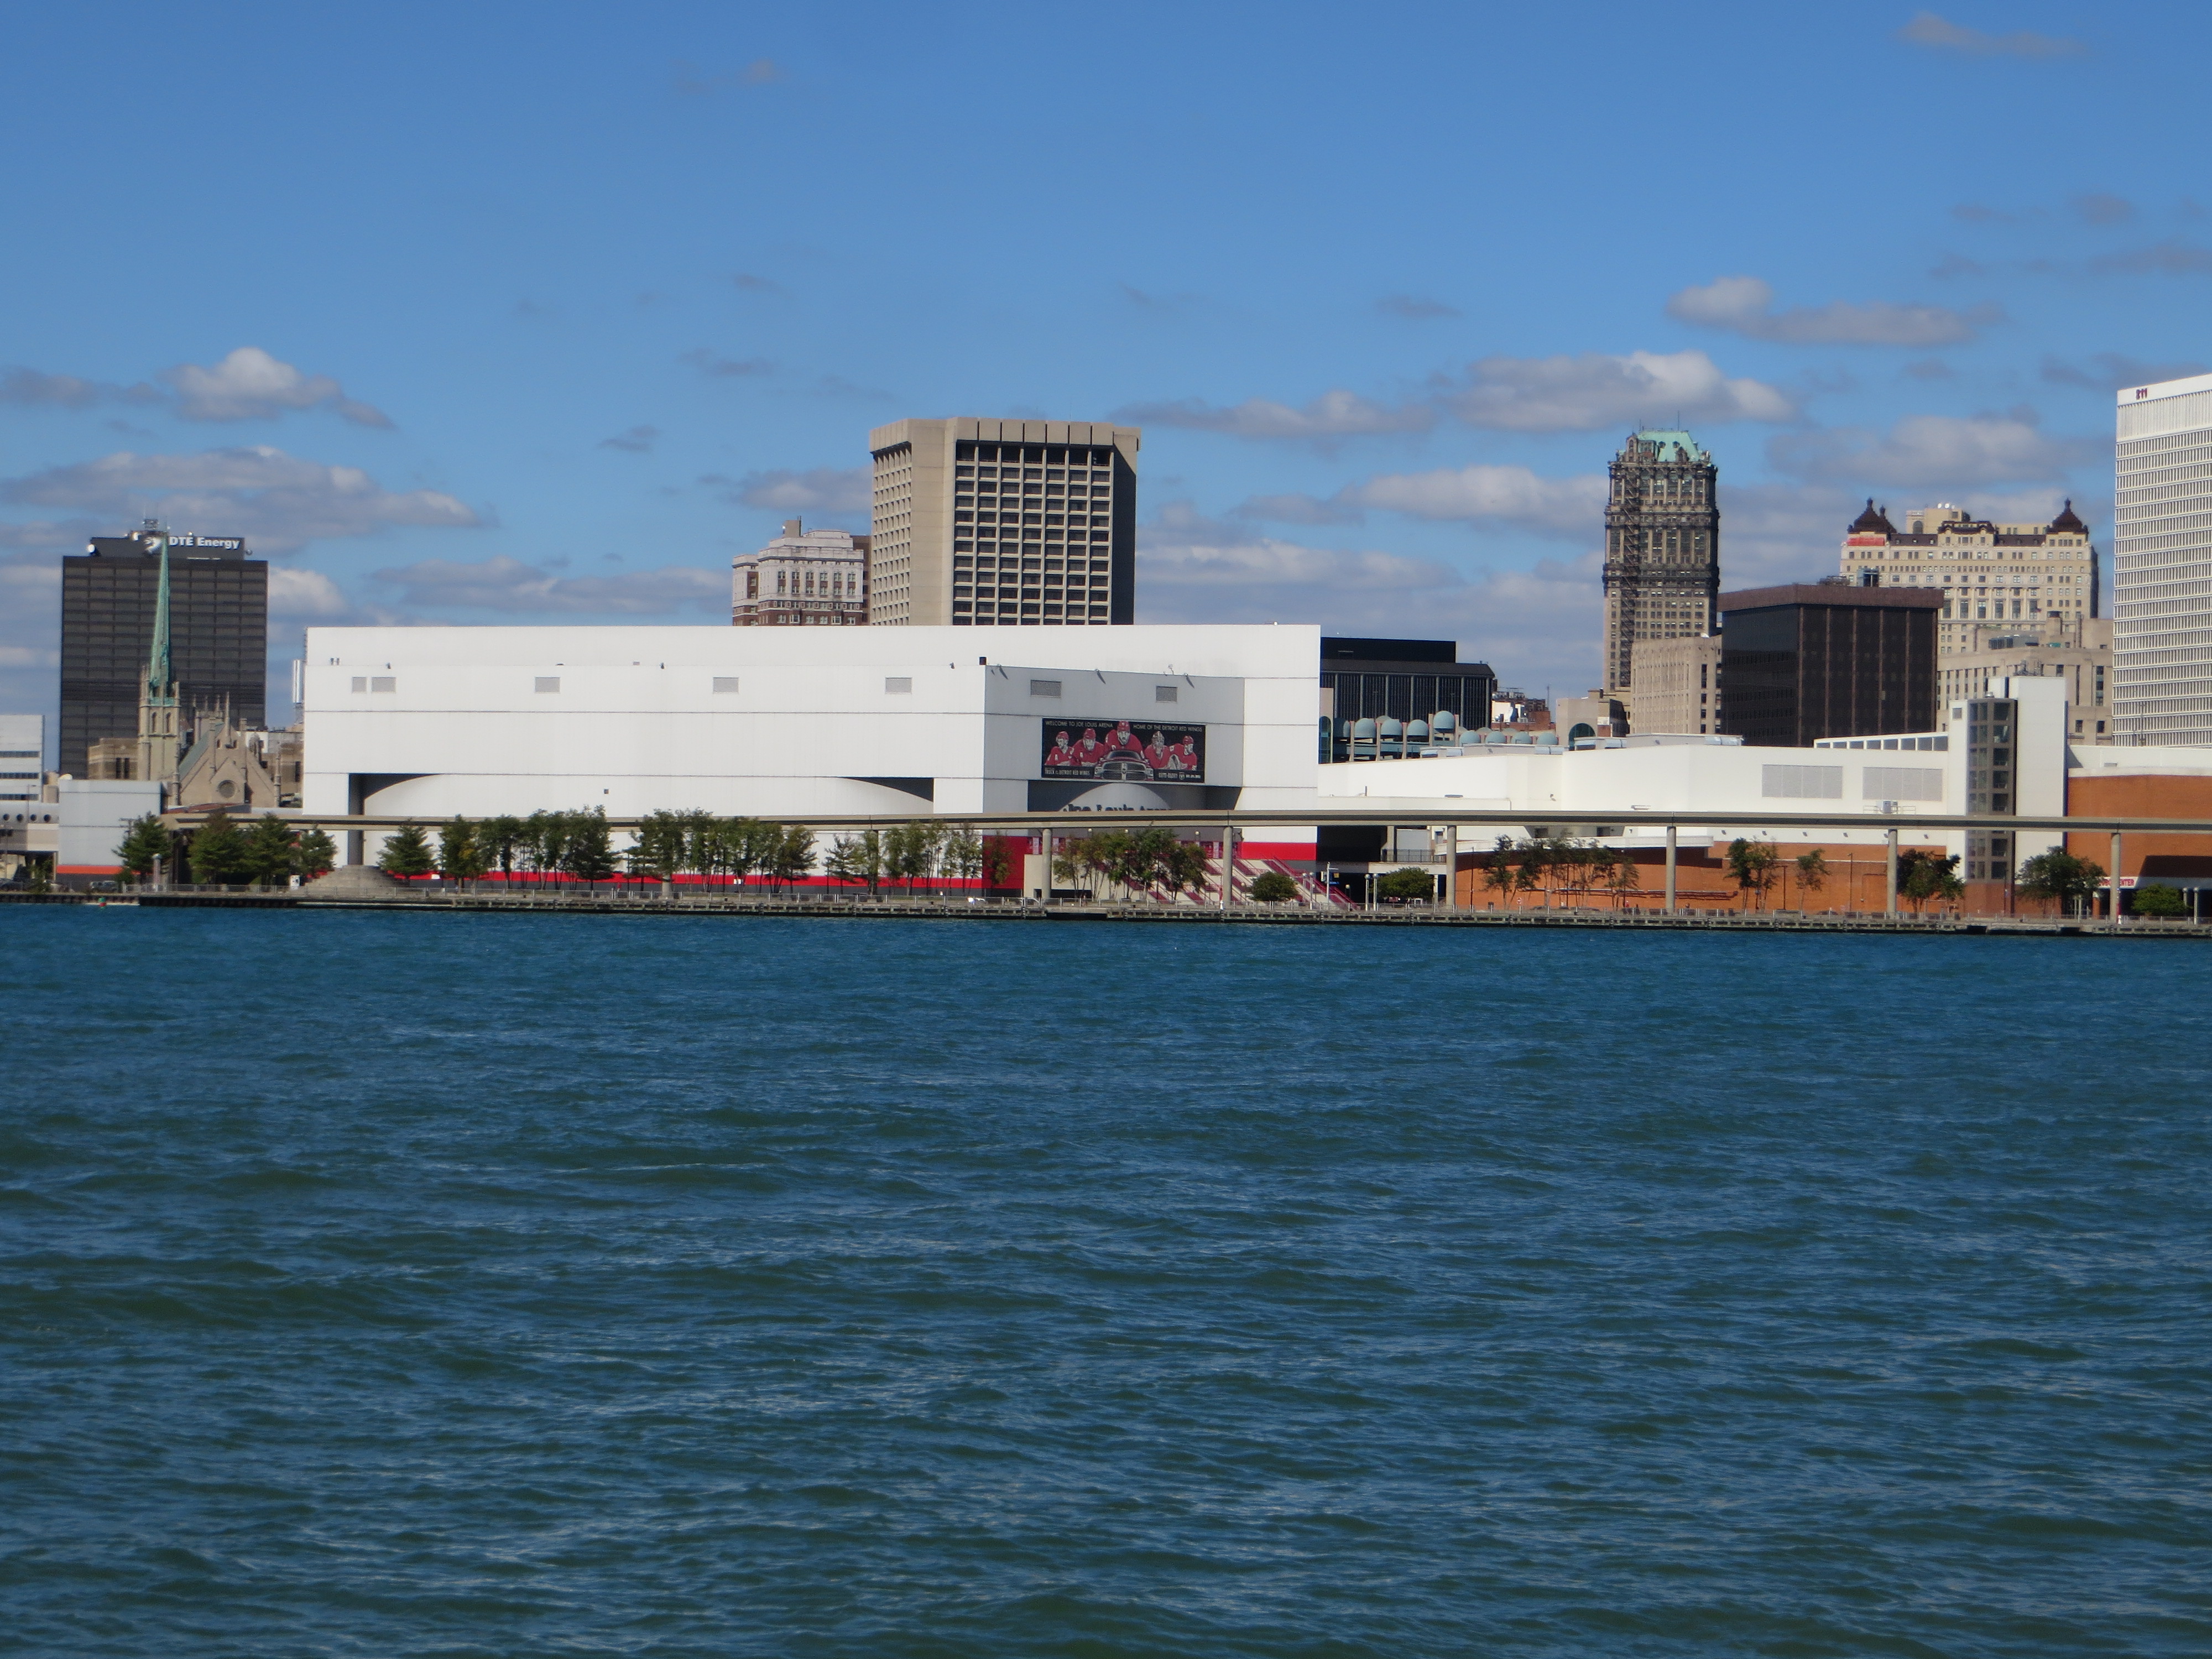 The Detroit Line - Joe Louis Arena being prepared for demolition